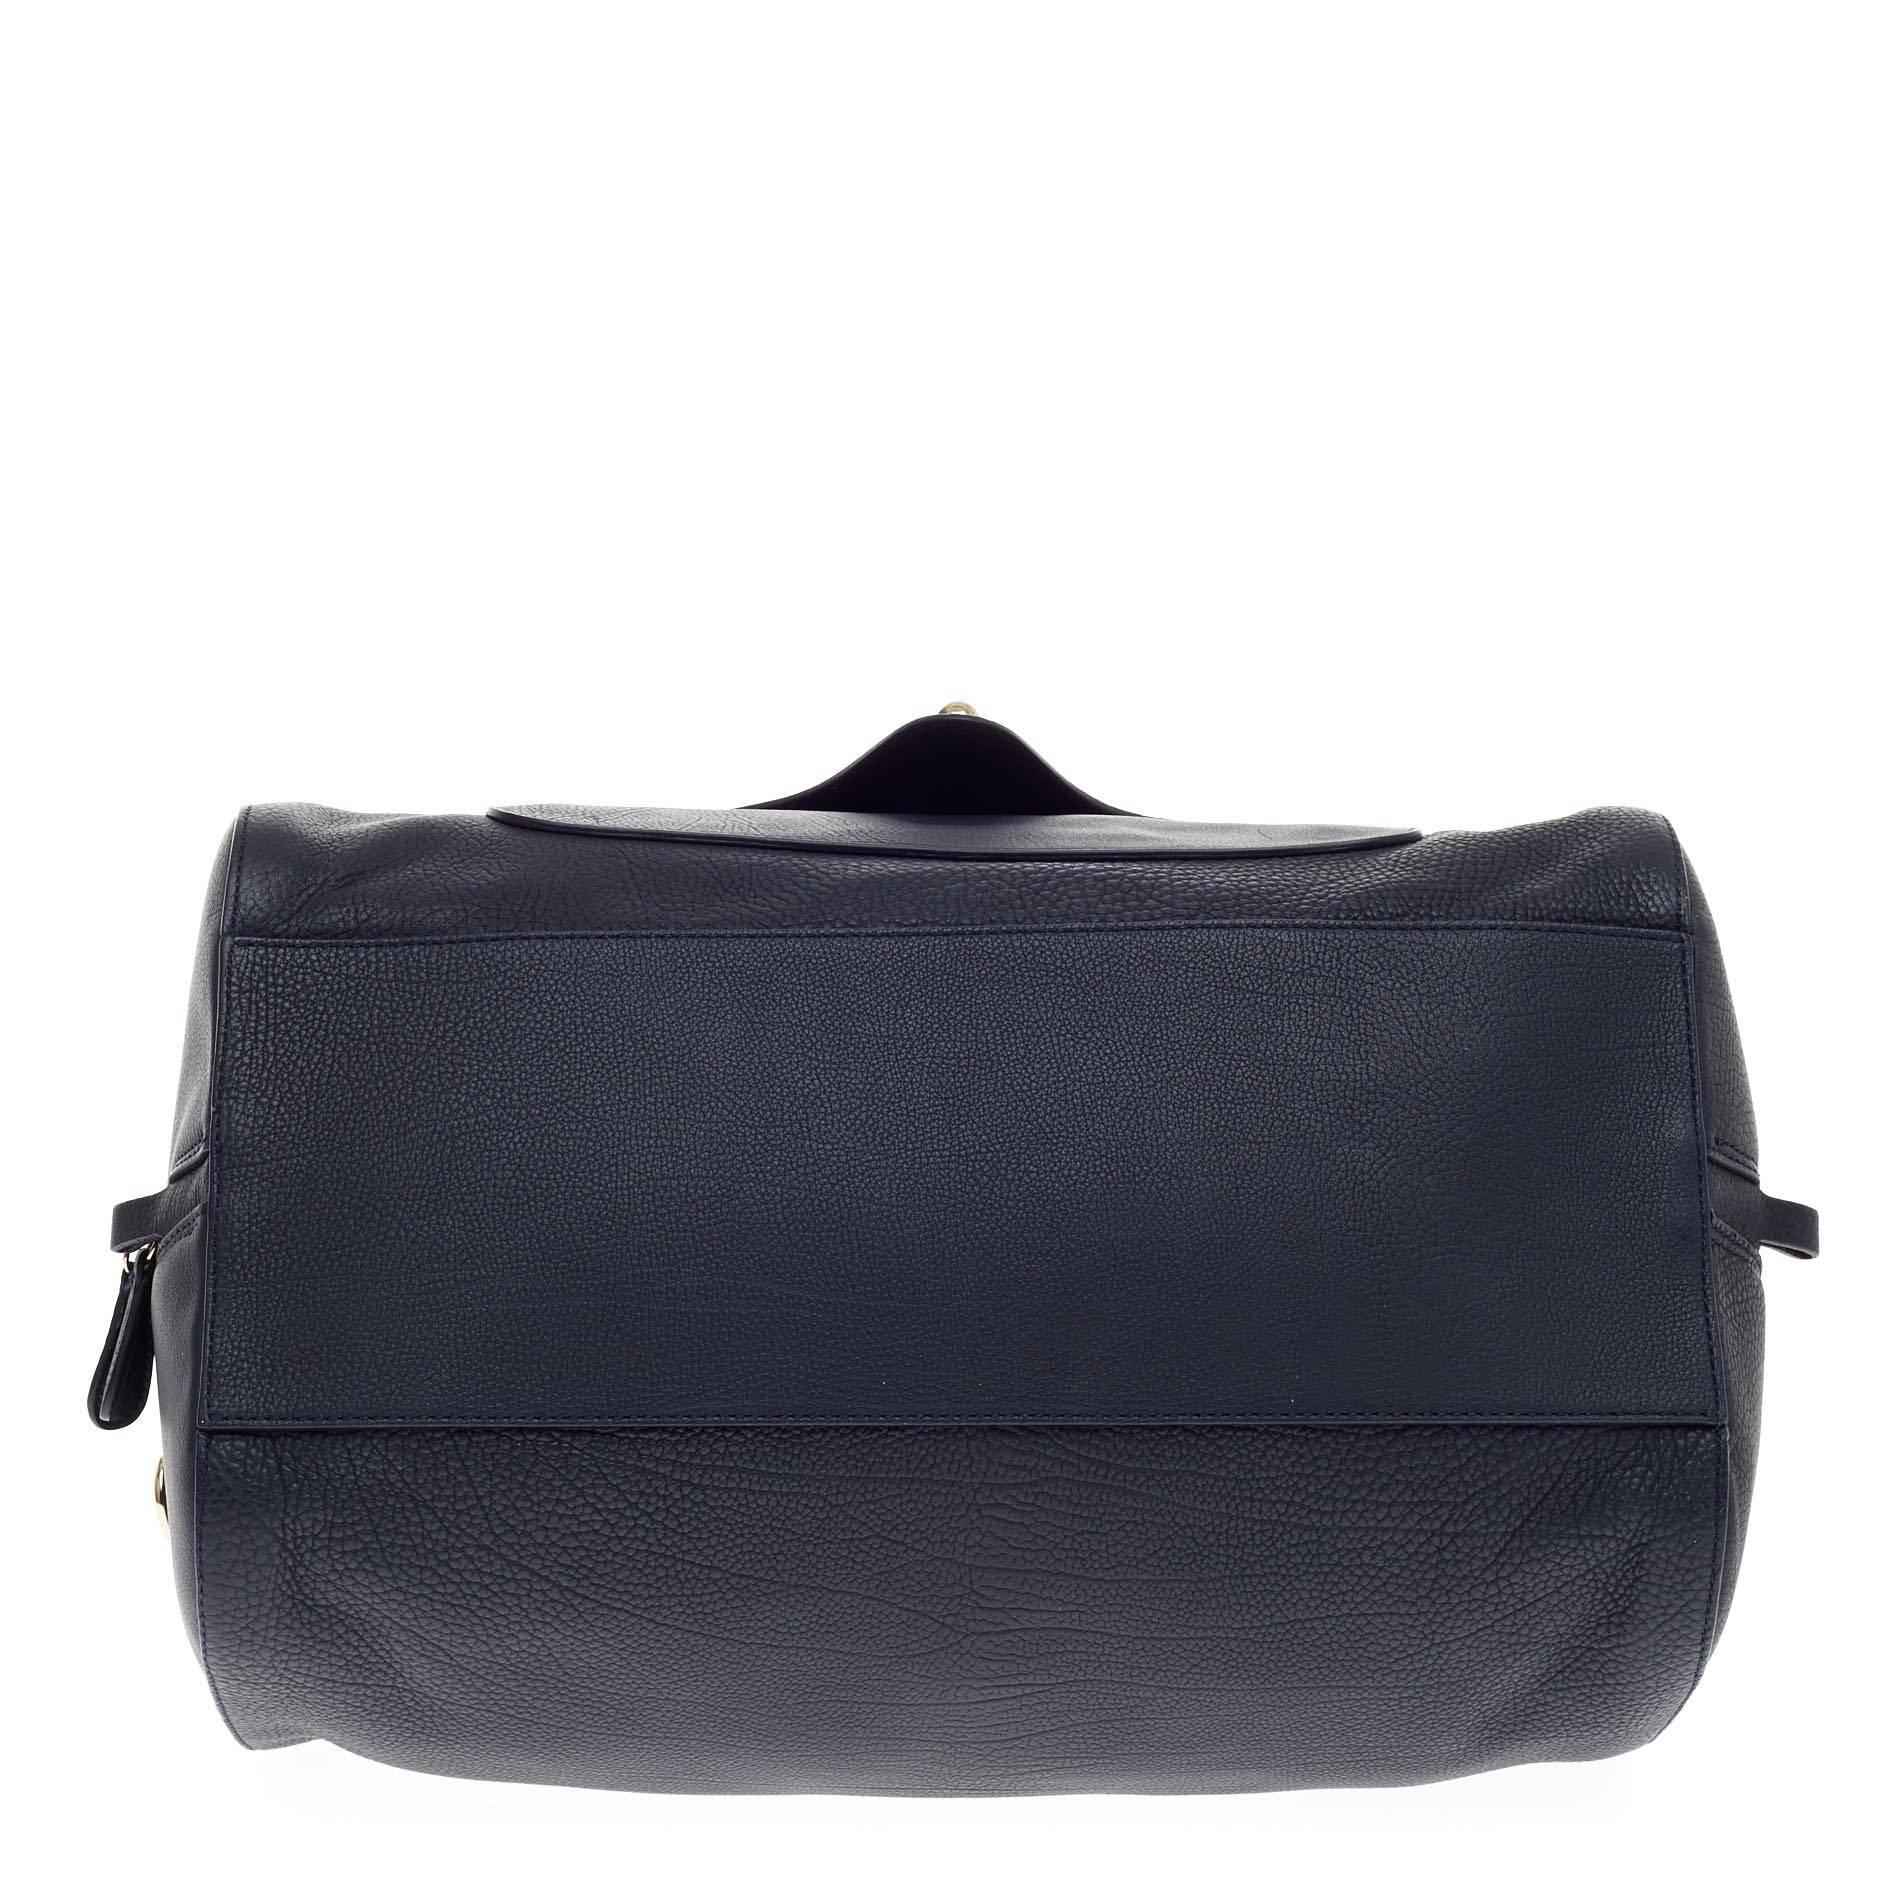 barrel satchel handbag